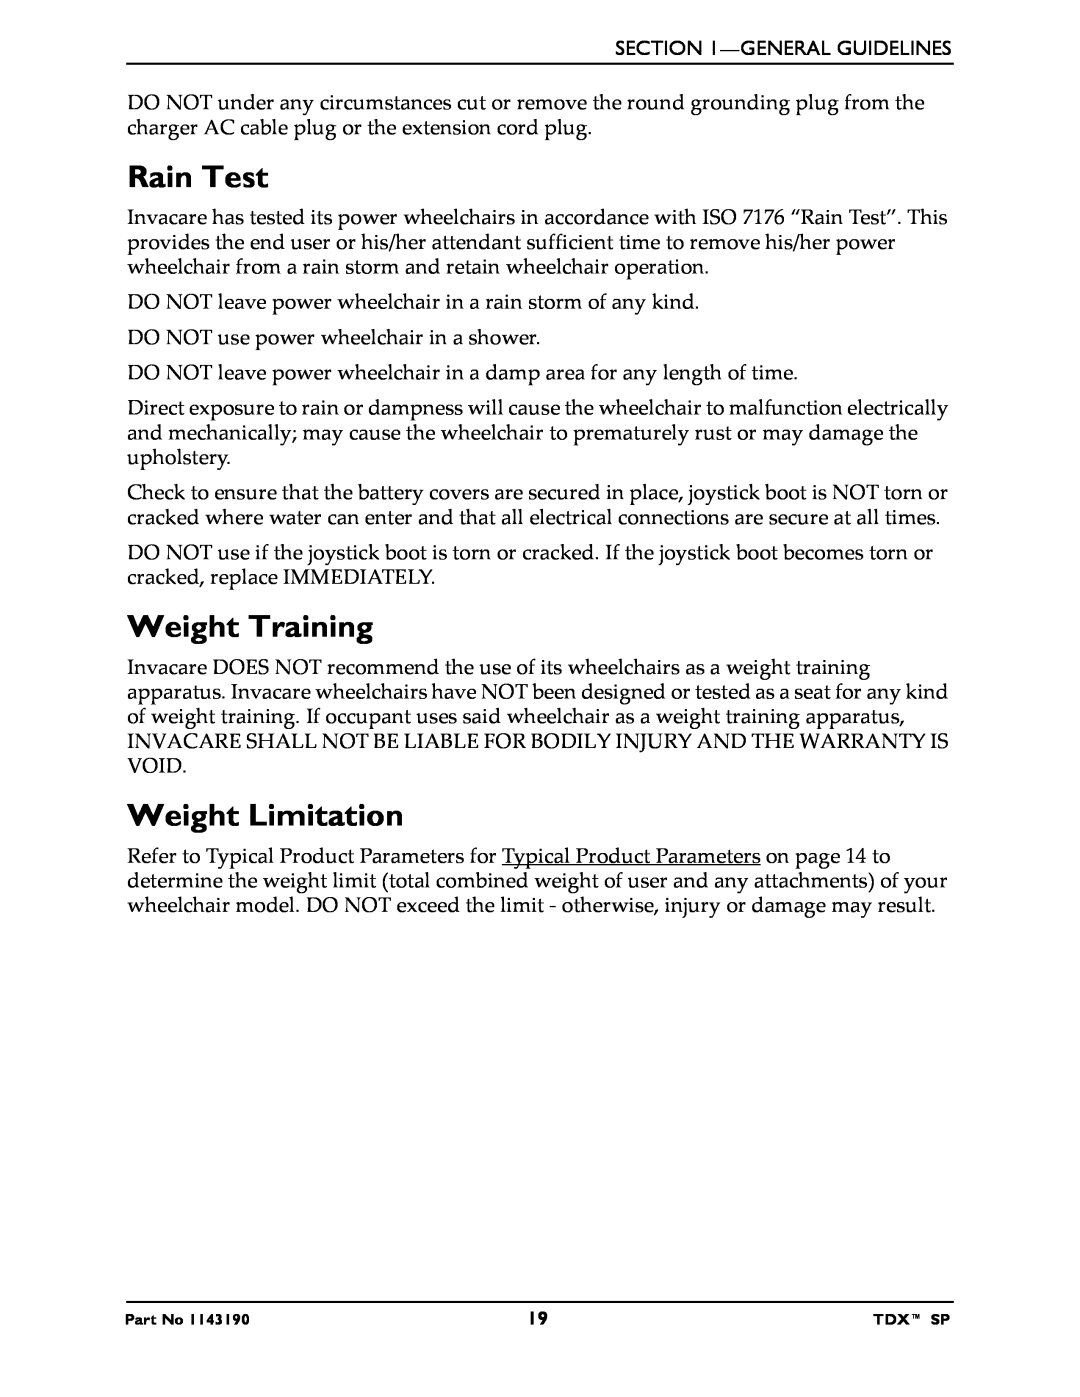 Invacare SP manual Rain Test, Weight Training, Weight Limitation 